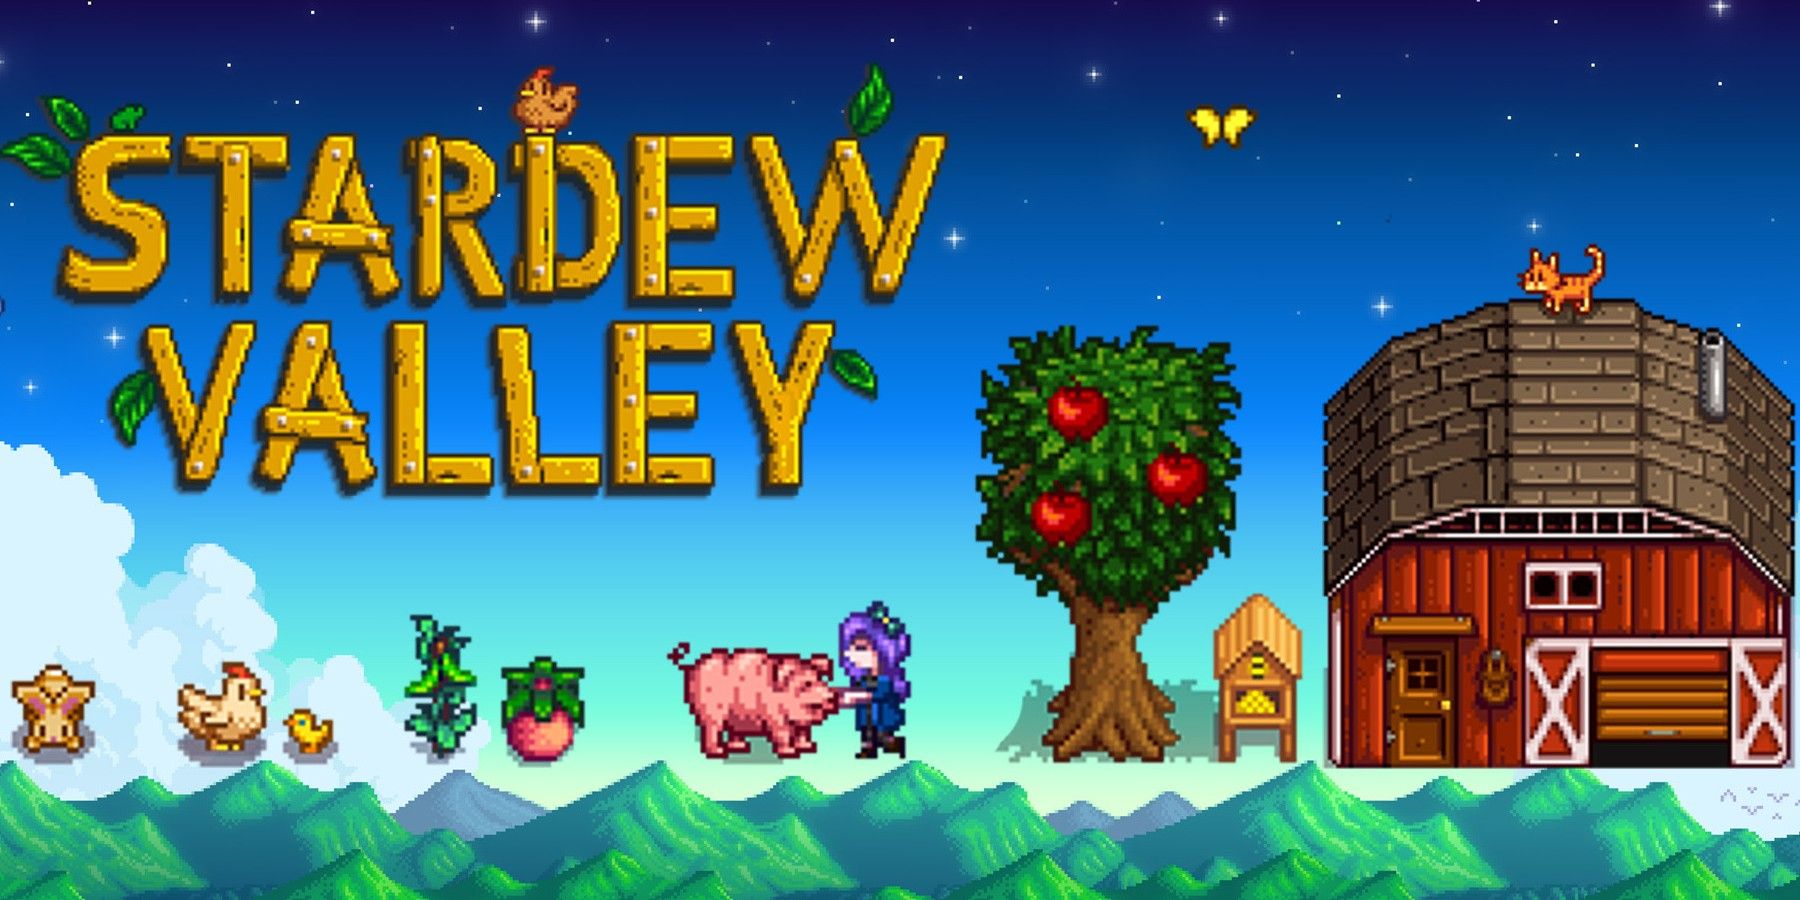 stardew-valley-title-screen